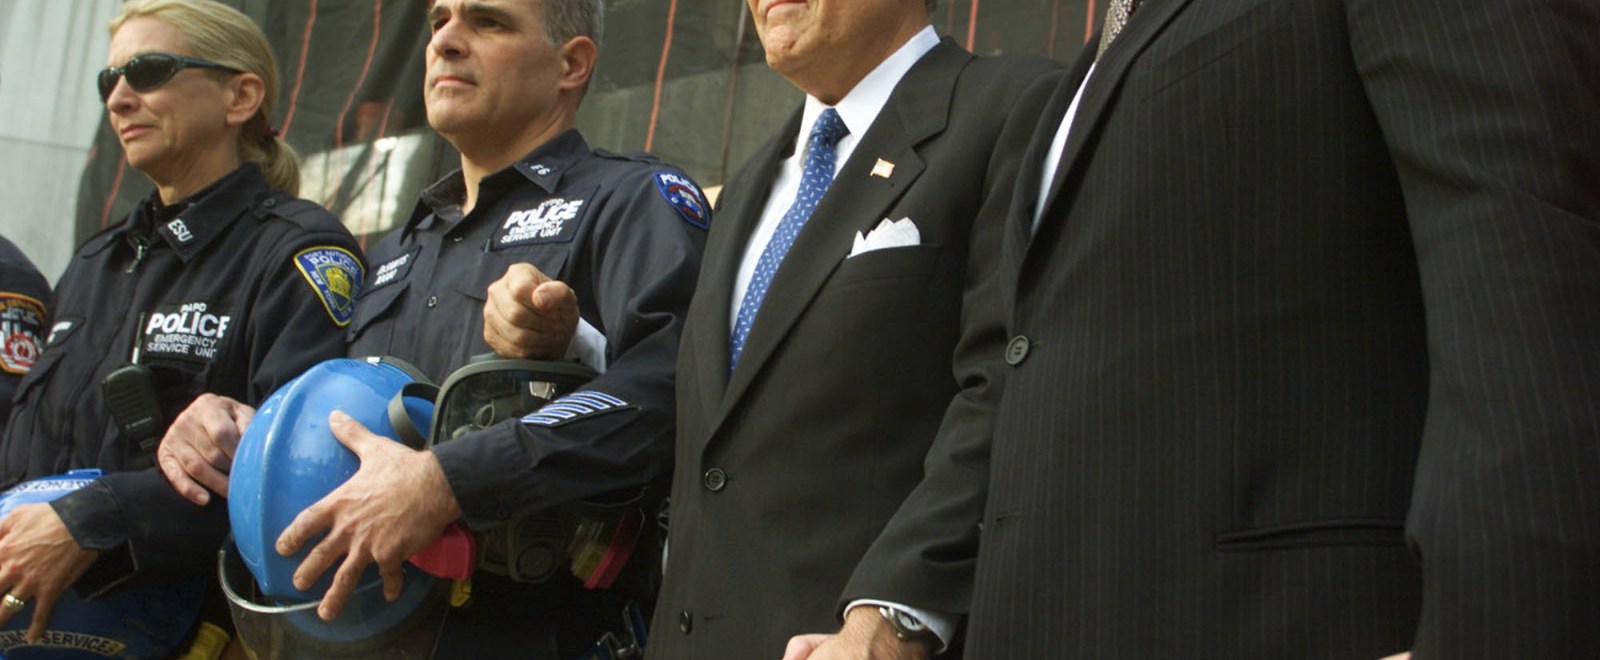 Rudy Giuliani at WTC site in 2011